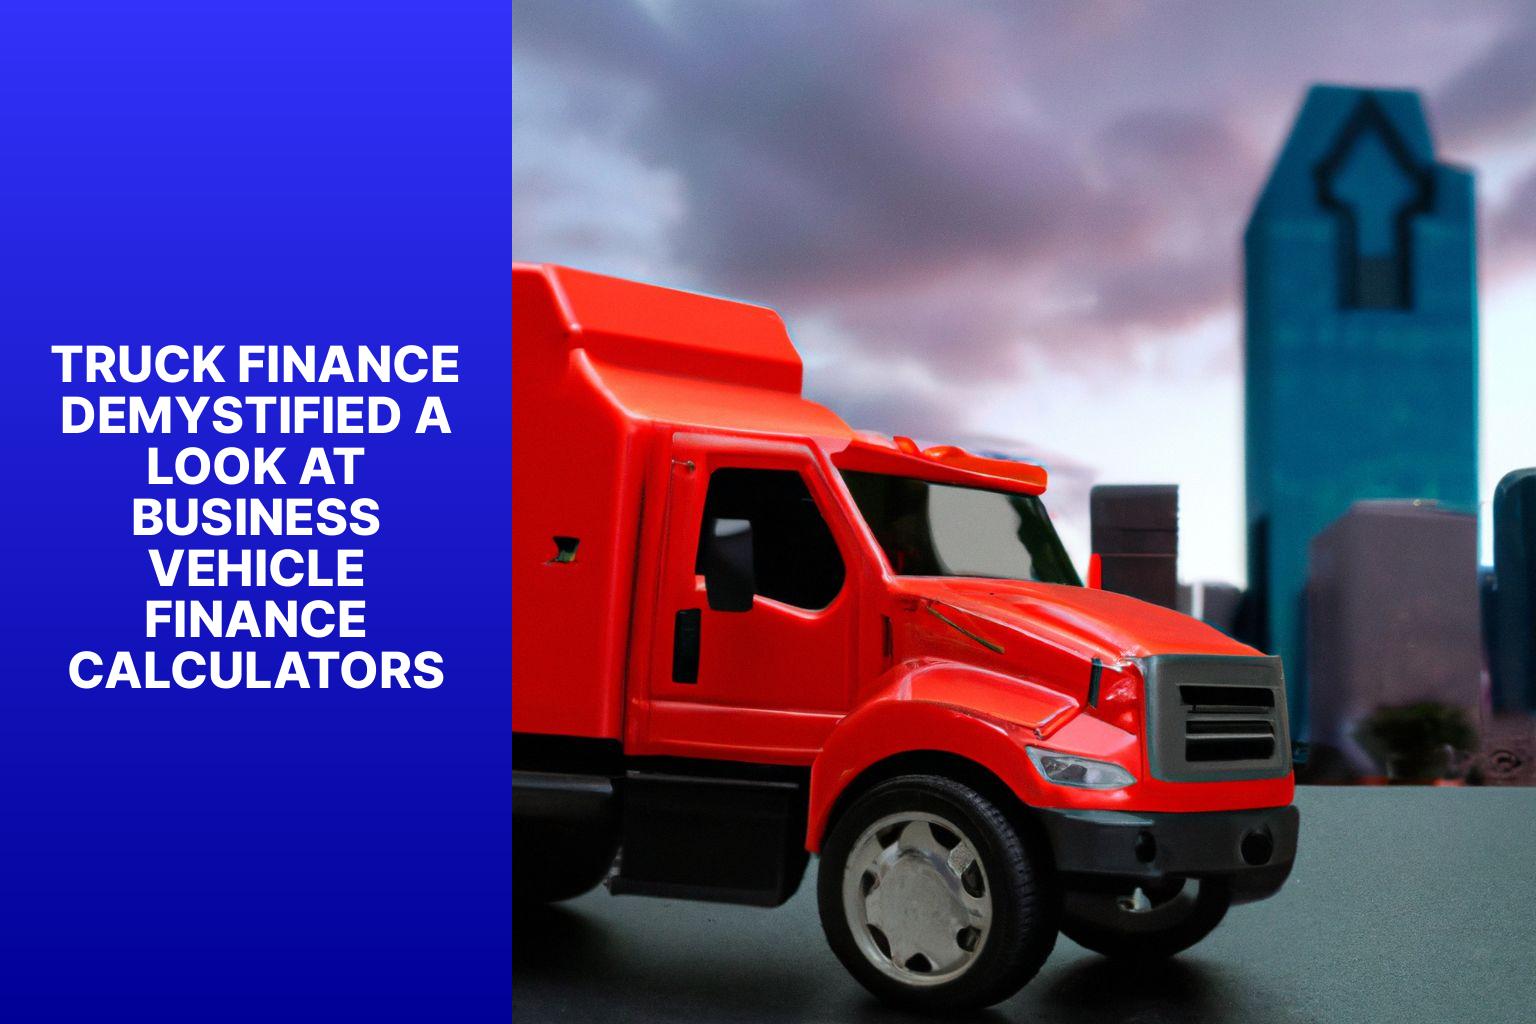 Truck Finance Demystified A Look at Business Vehicle Finance Calculators